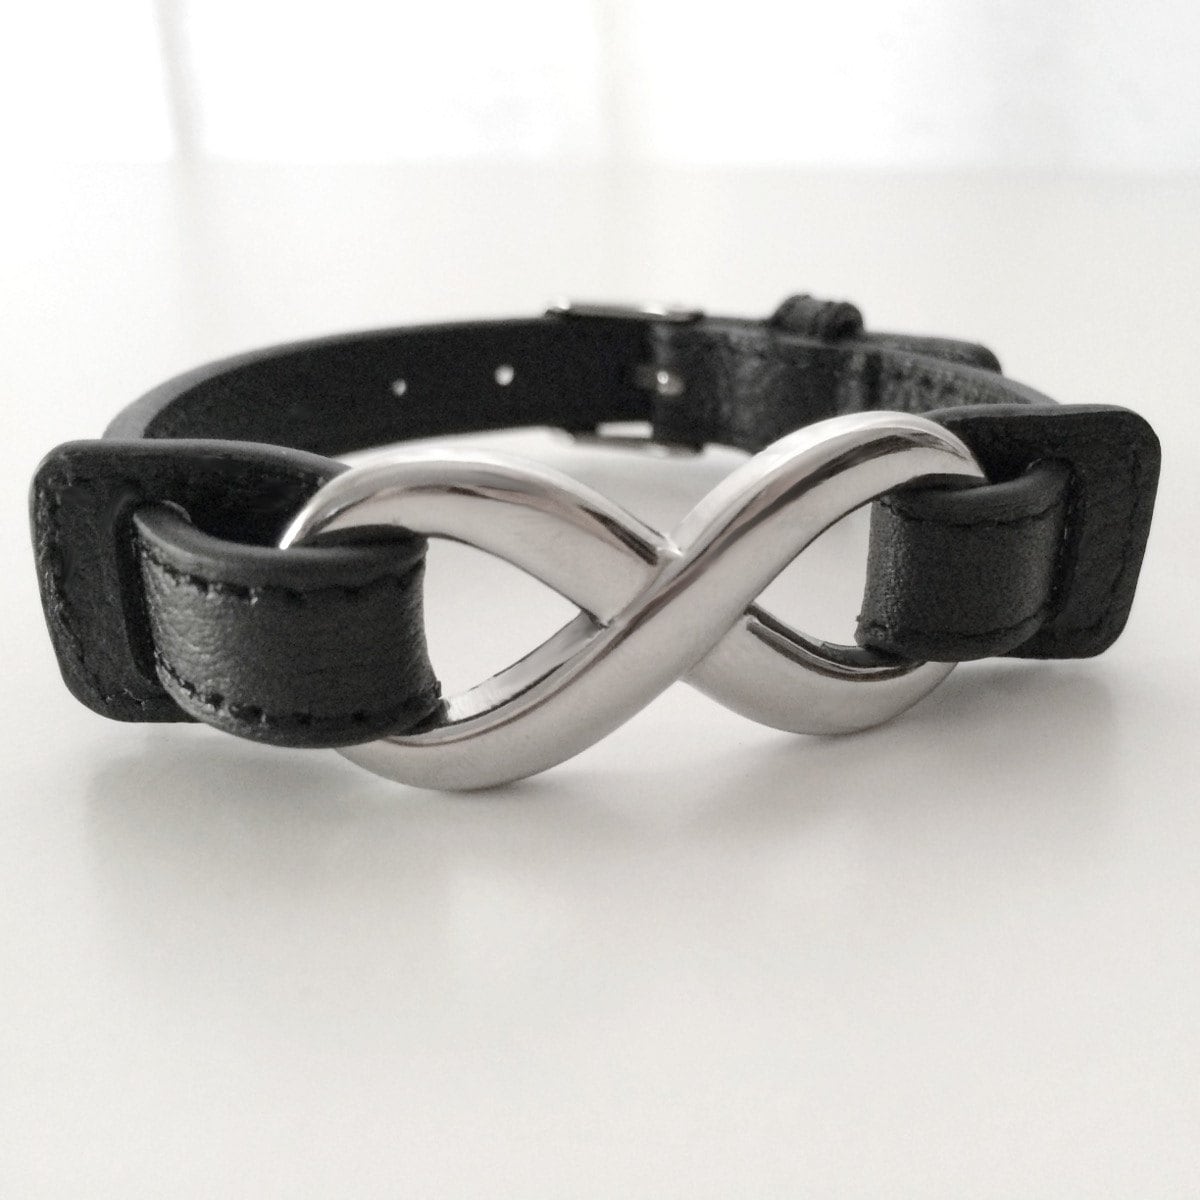 Leather Infinity Cuff Bracelet, Unisex Jewelry, Adjustable Length Bracelet, Watch Band Style, Couples Jewelry